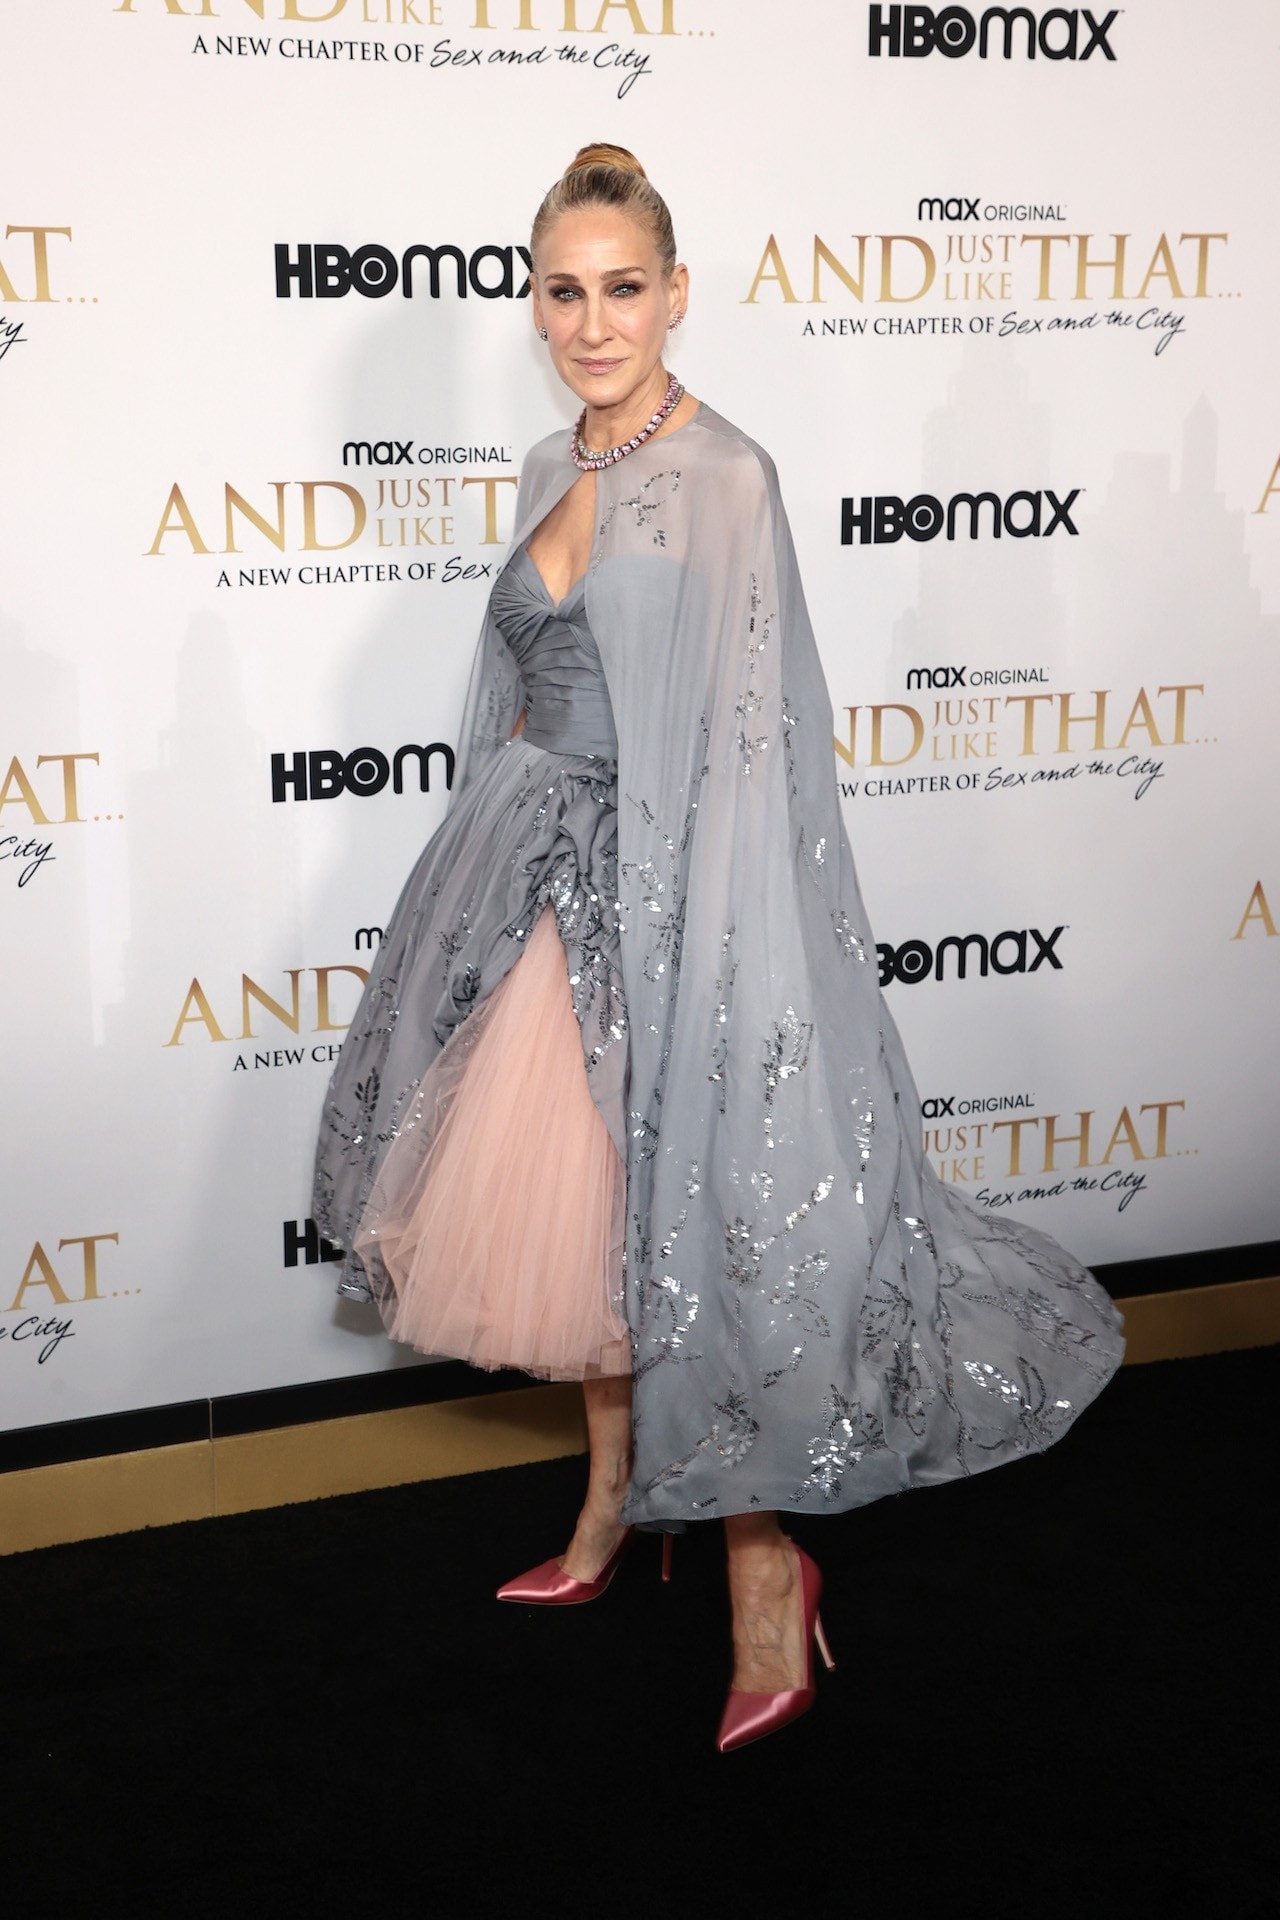 Sarah Jessica Parker And Just Like That Premiere Dress Oscar de la Renta Auction UNICEF Charity Info